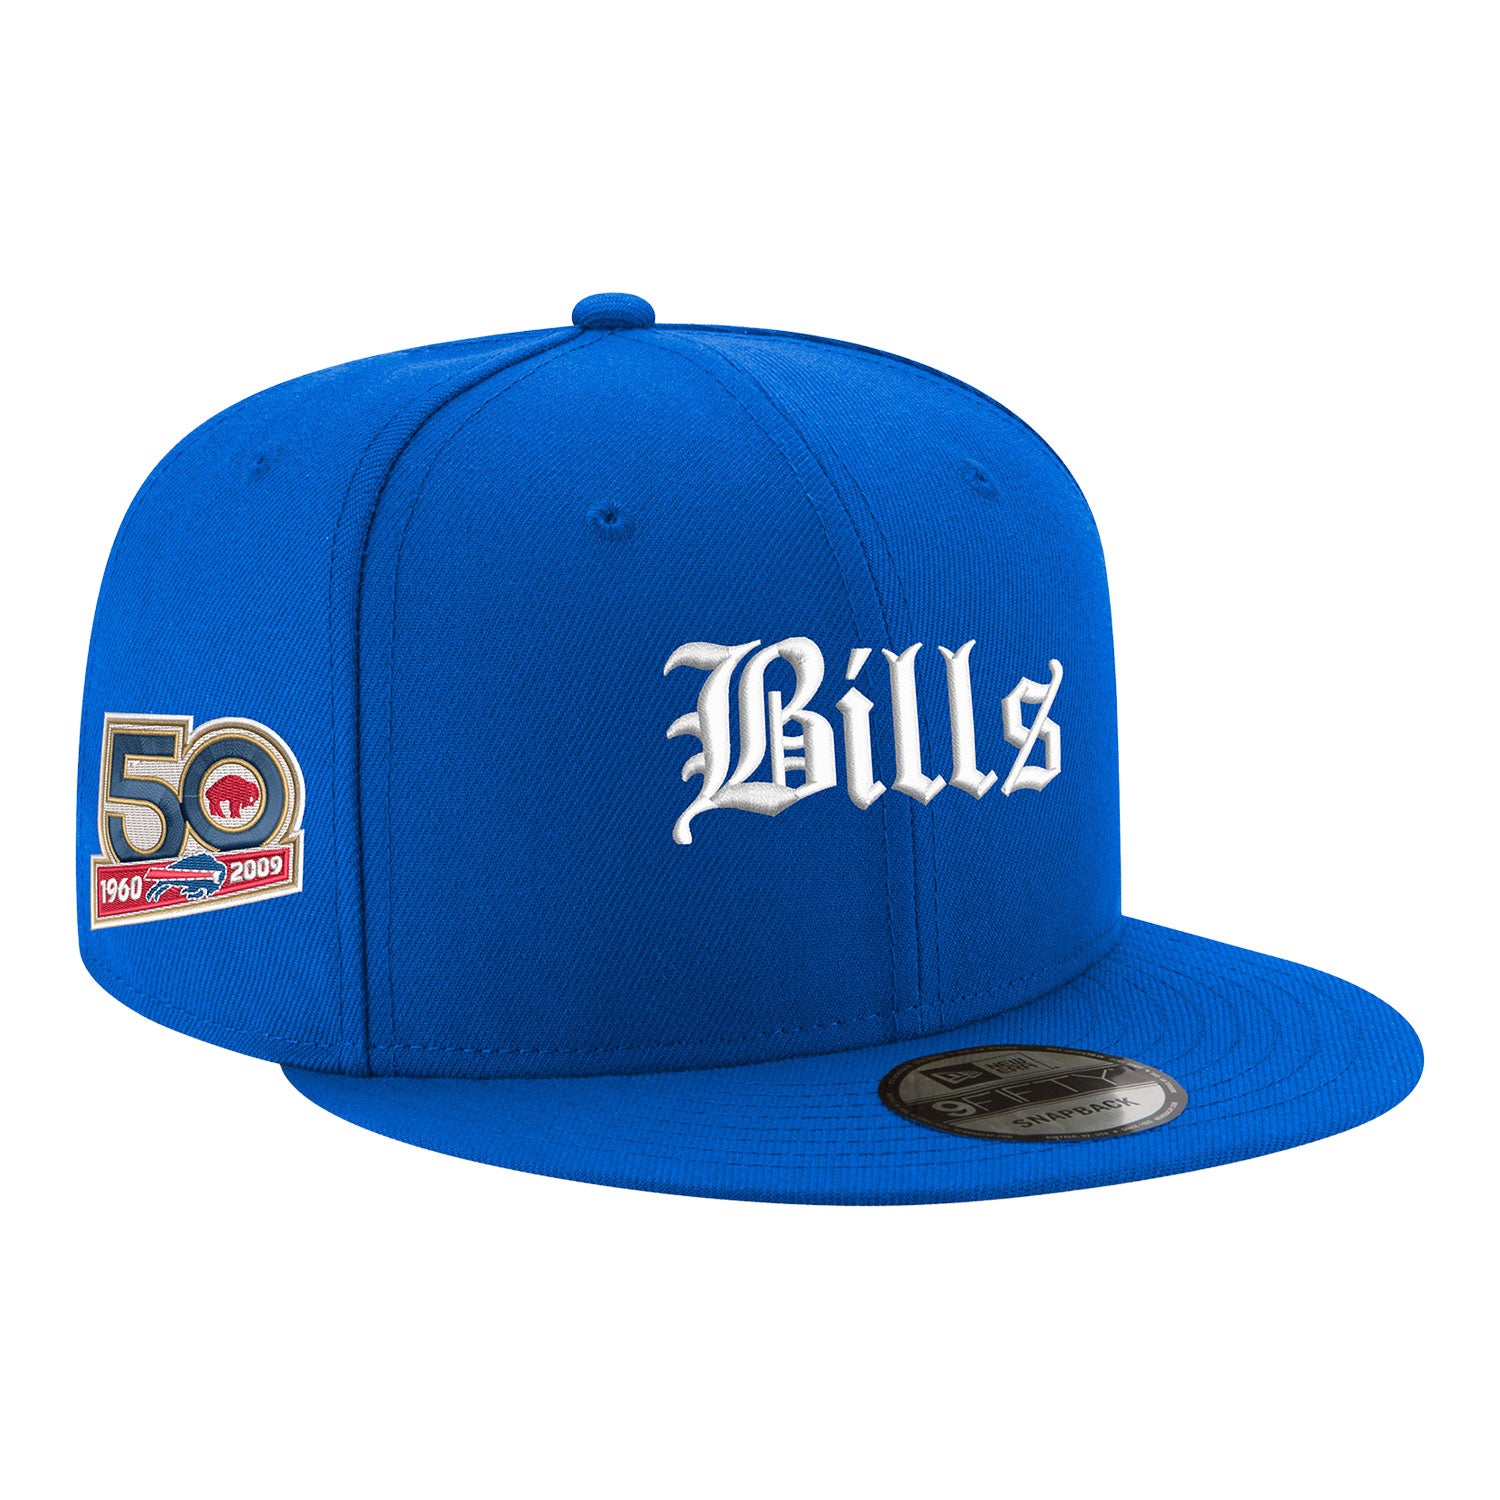 Bills New Era Old English 9FIFTY Snapback Hat | The Bills Store